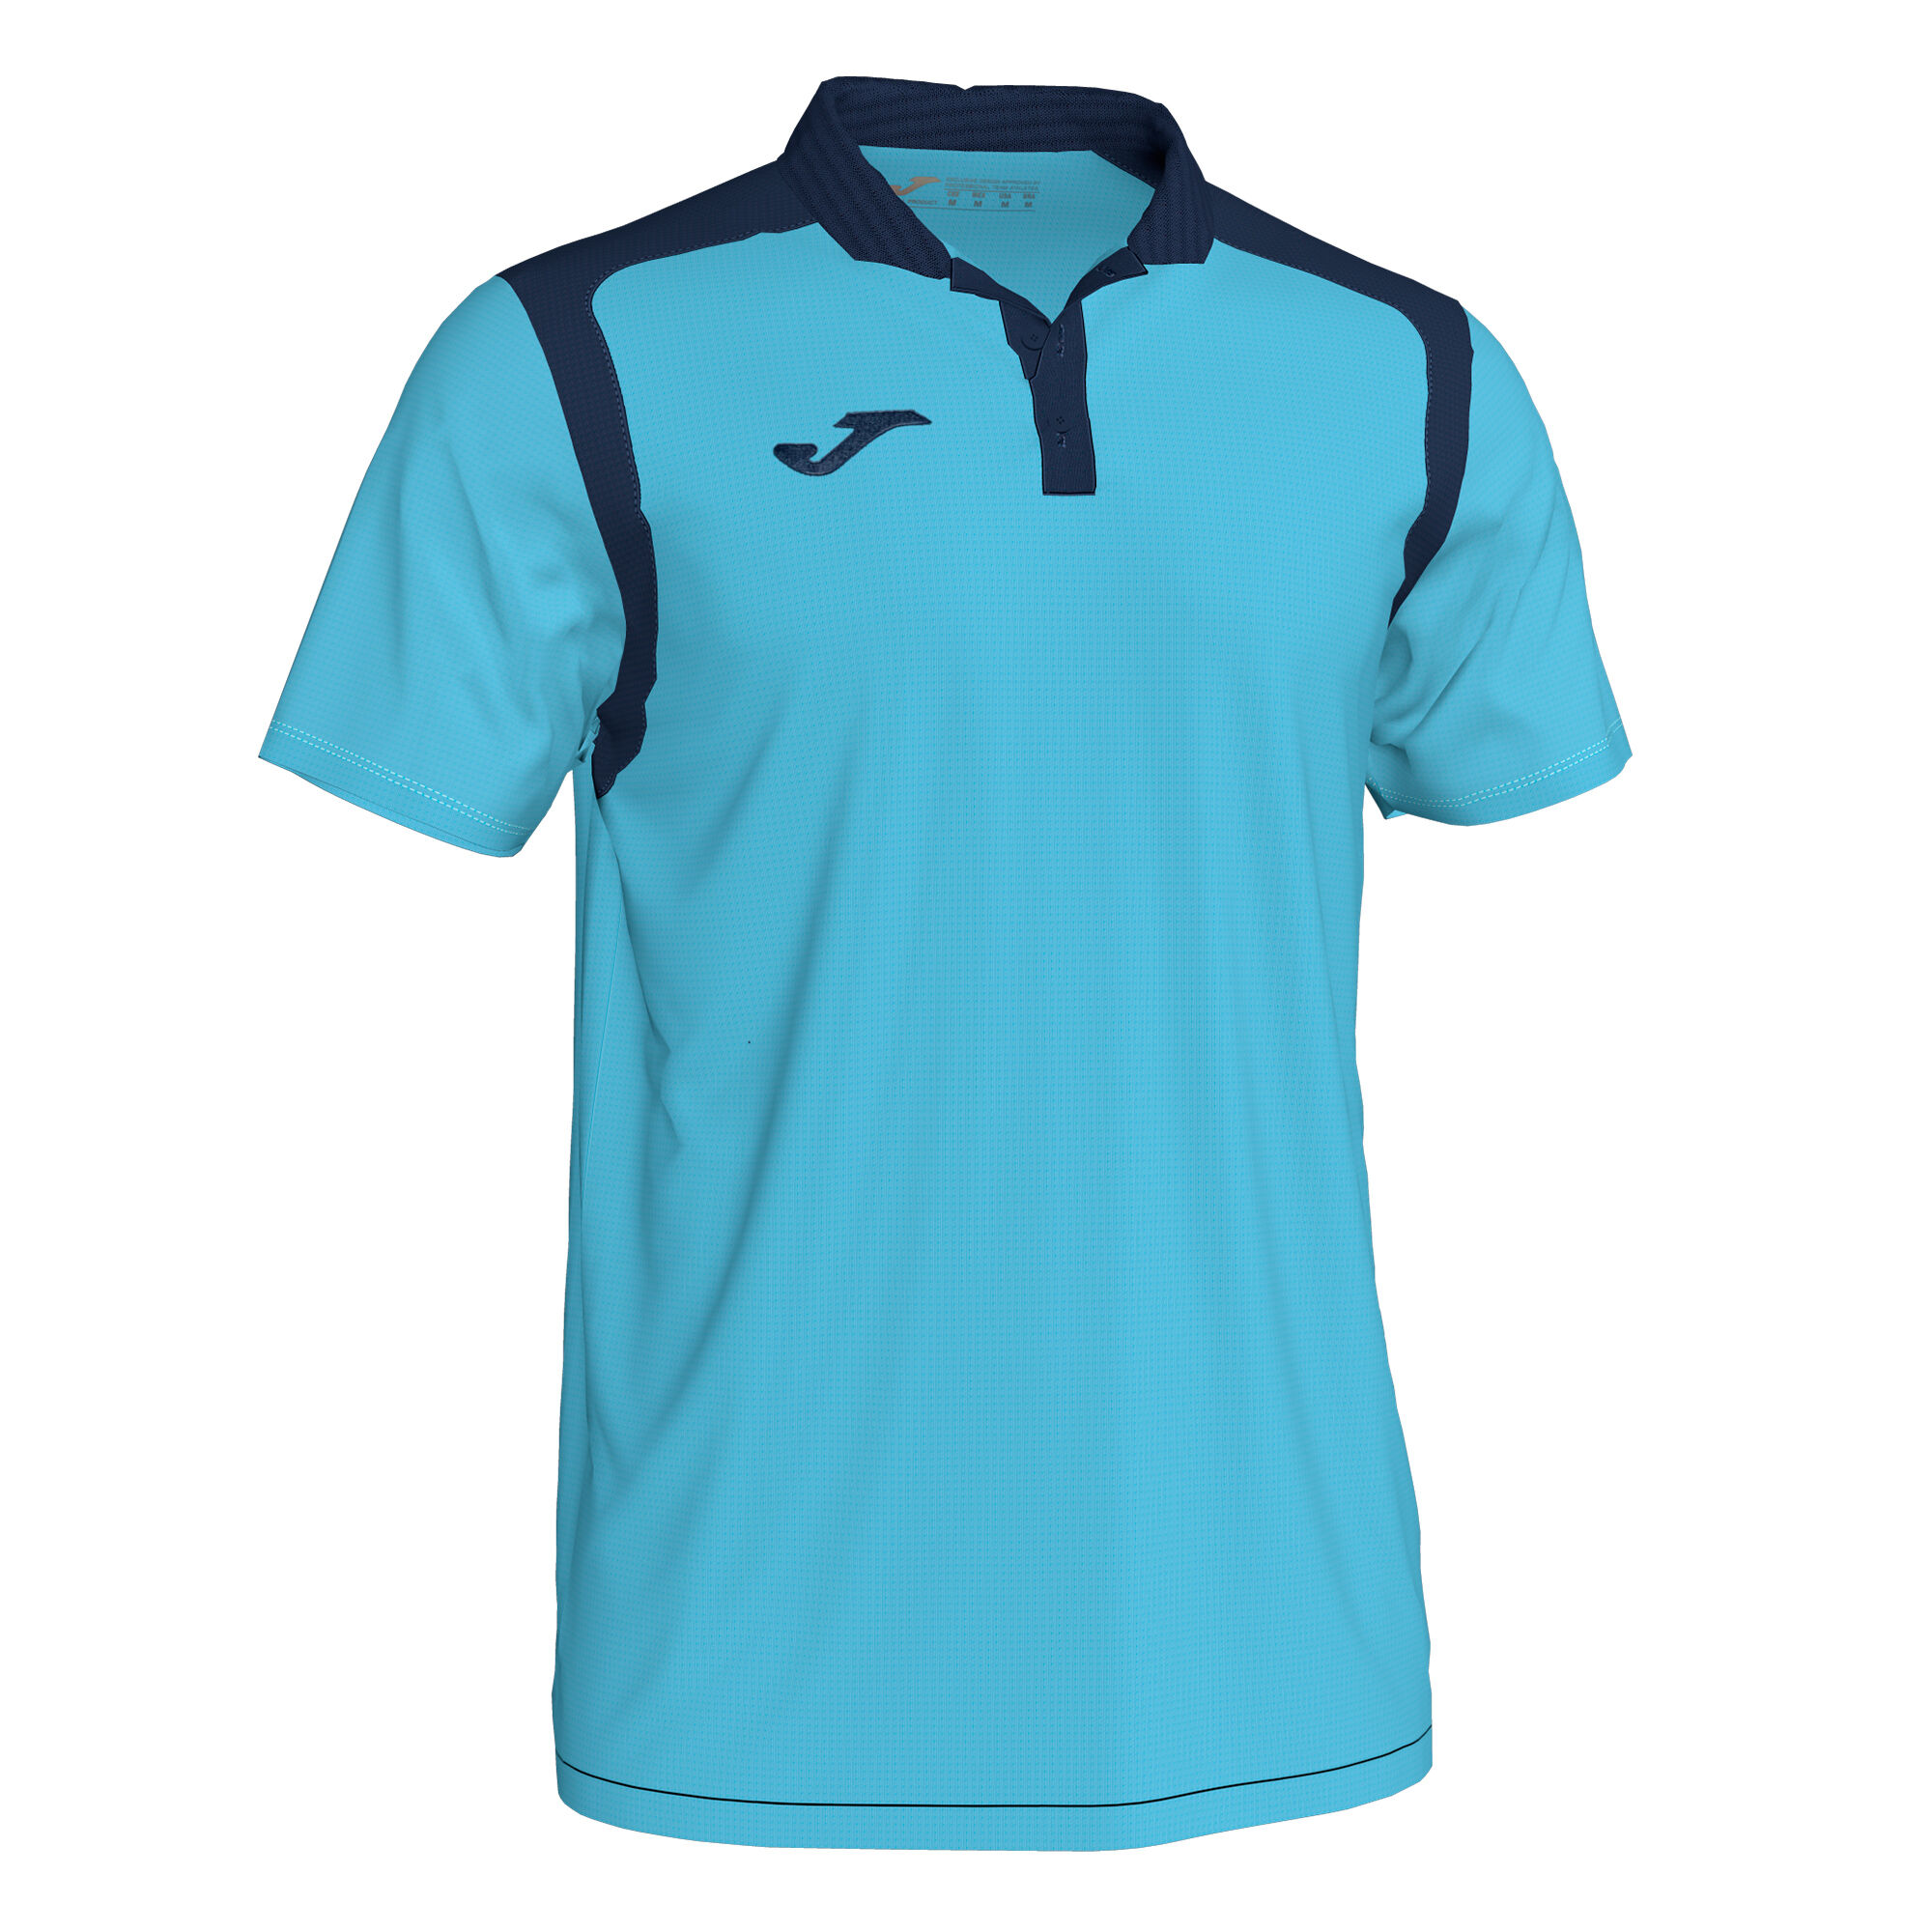 Polo shirt short-sleeve man Championship V fluorescent turquoise navy blue